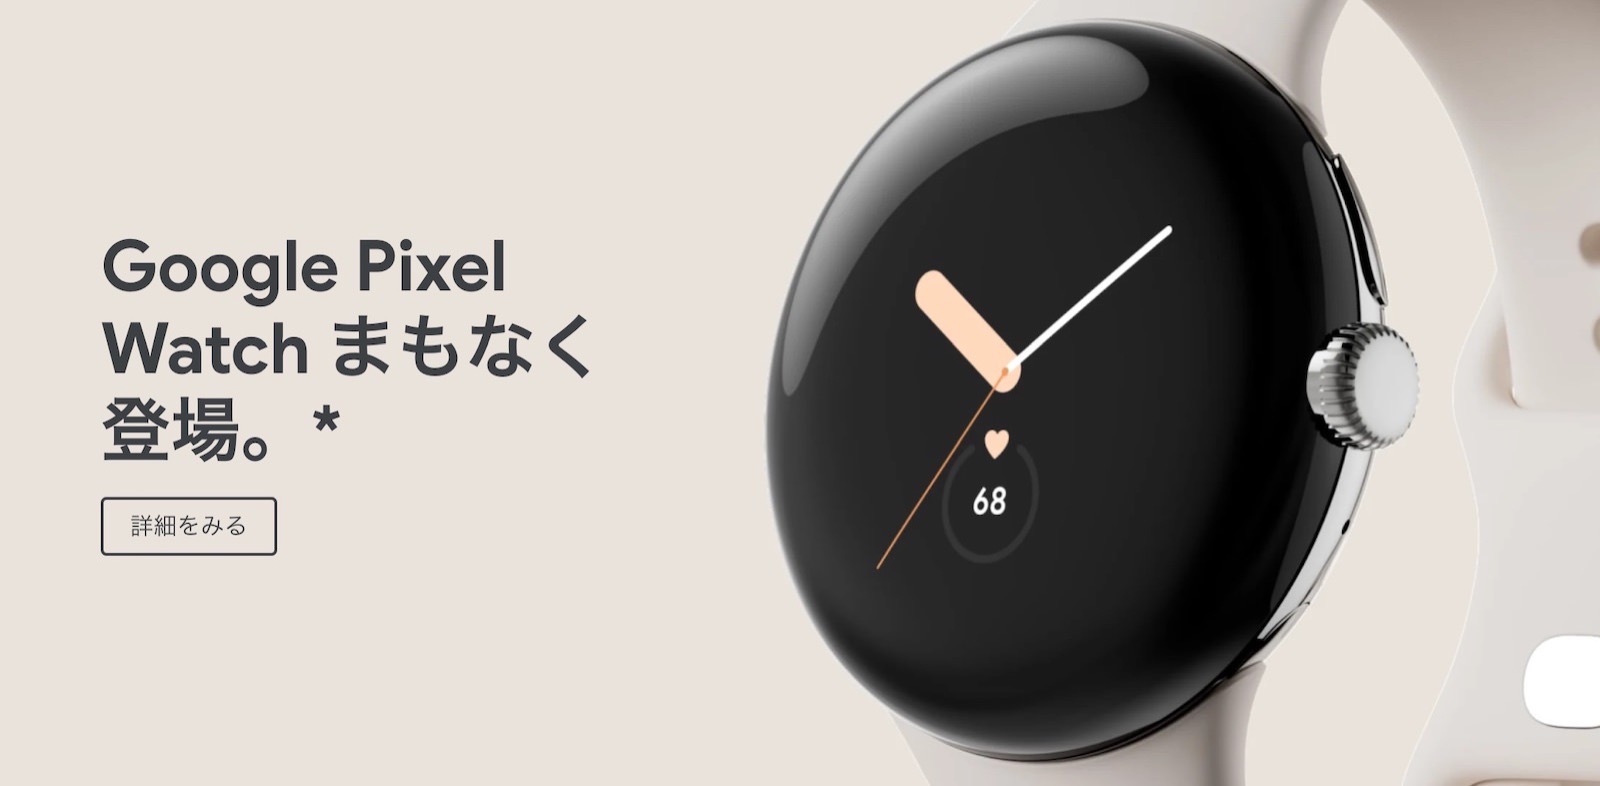 Google-Pixel-Watch-Official-Release.jpg